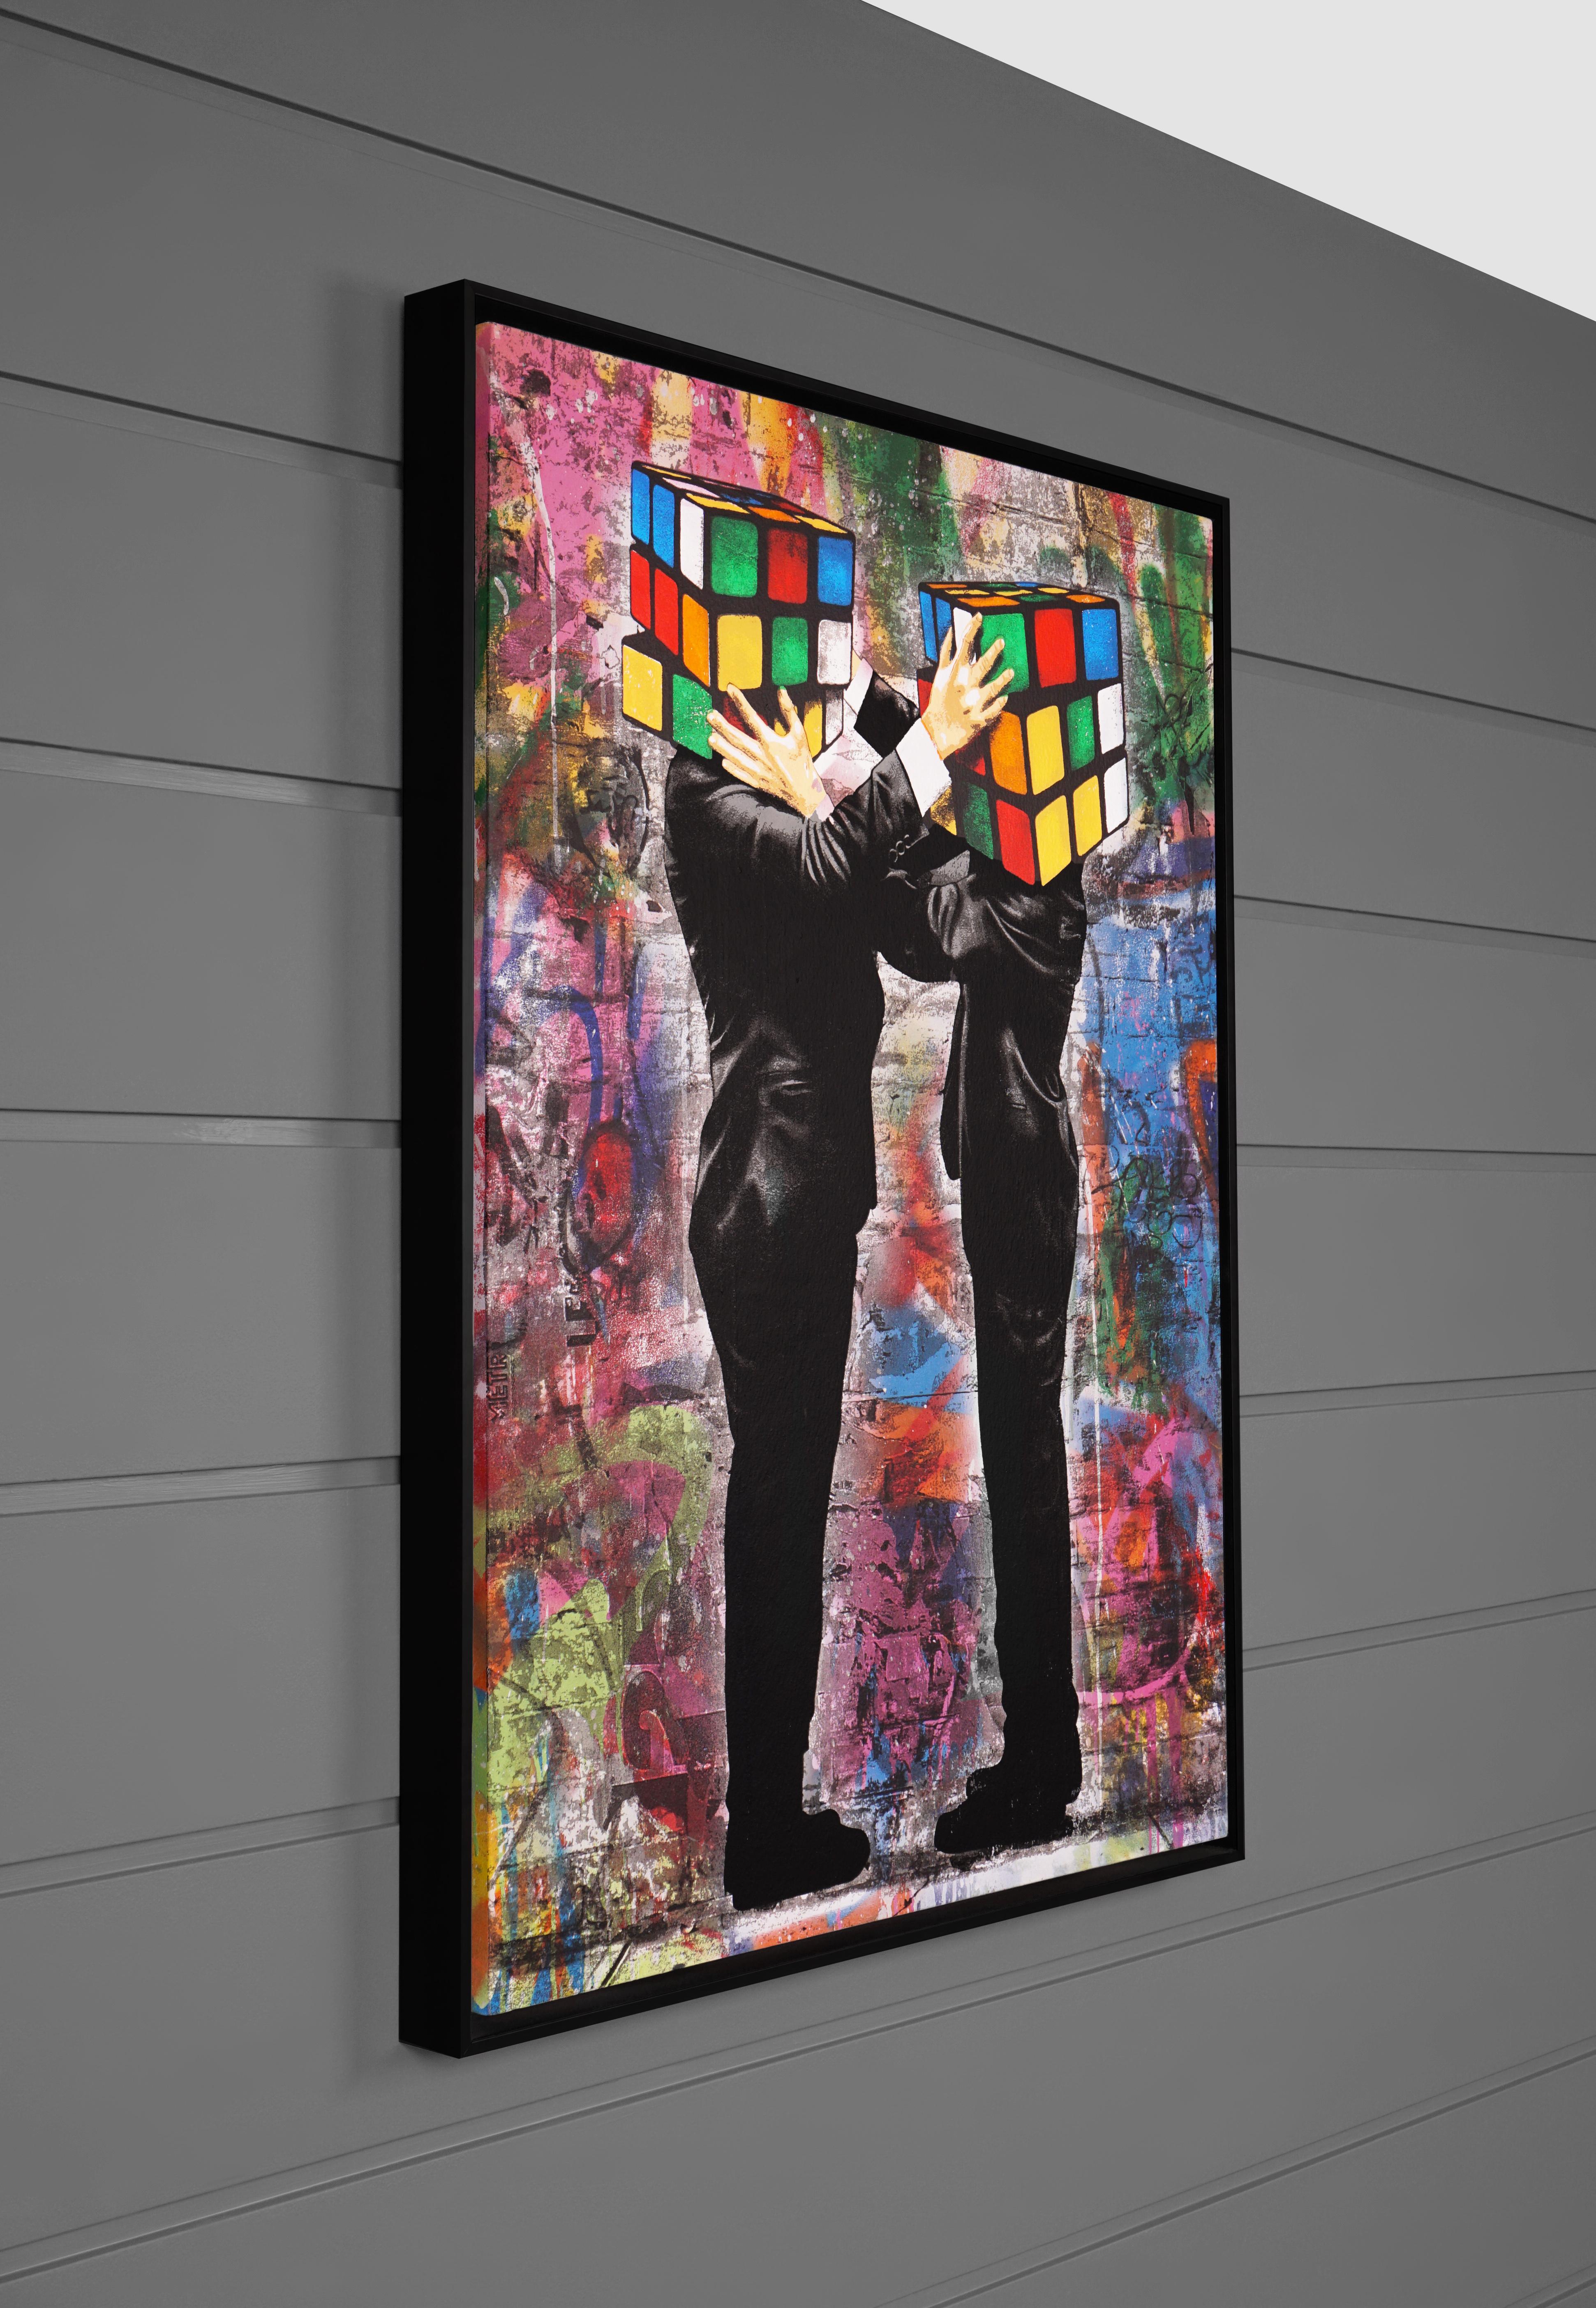 Hijack, 'Puzzled IV' Street Pop Art on Canvas, 2020 3